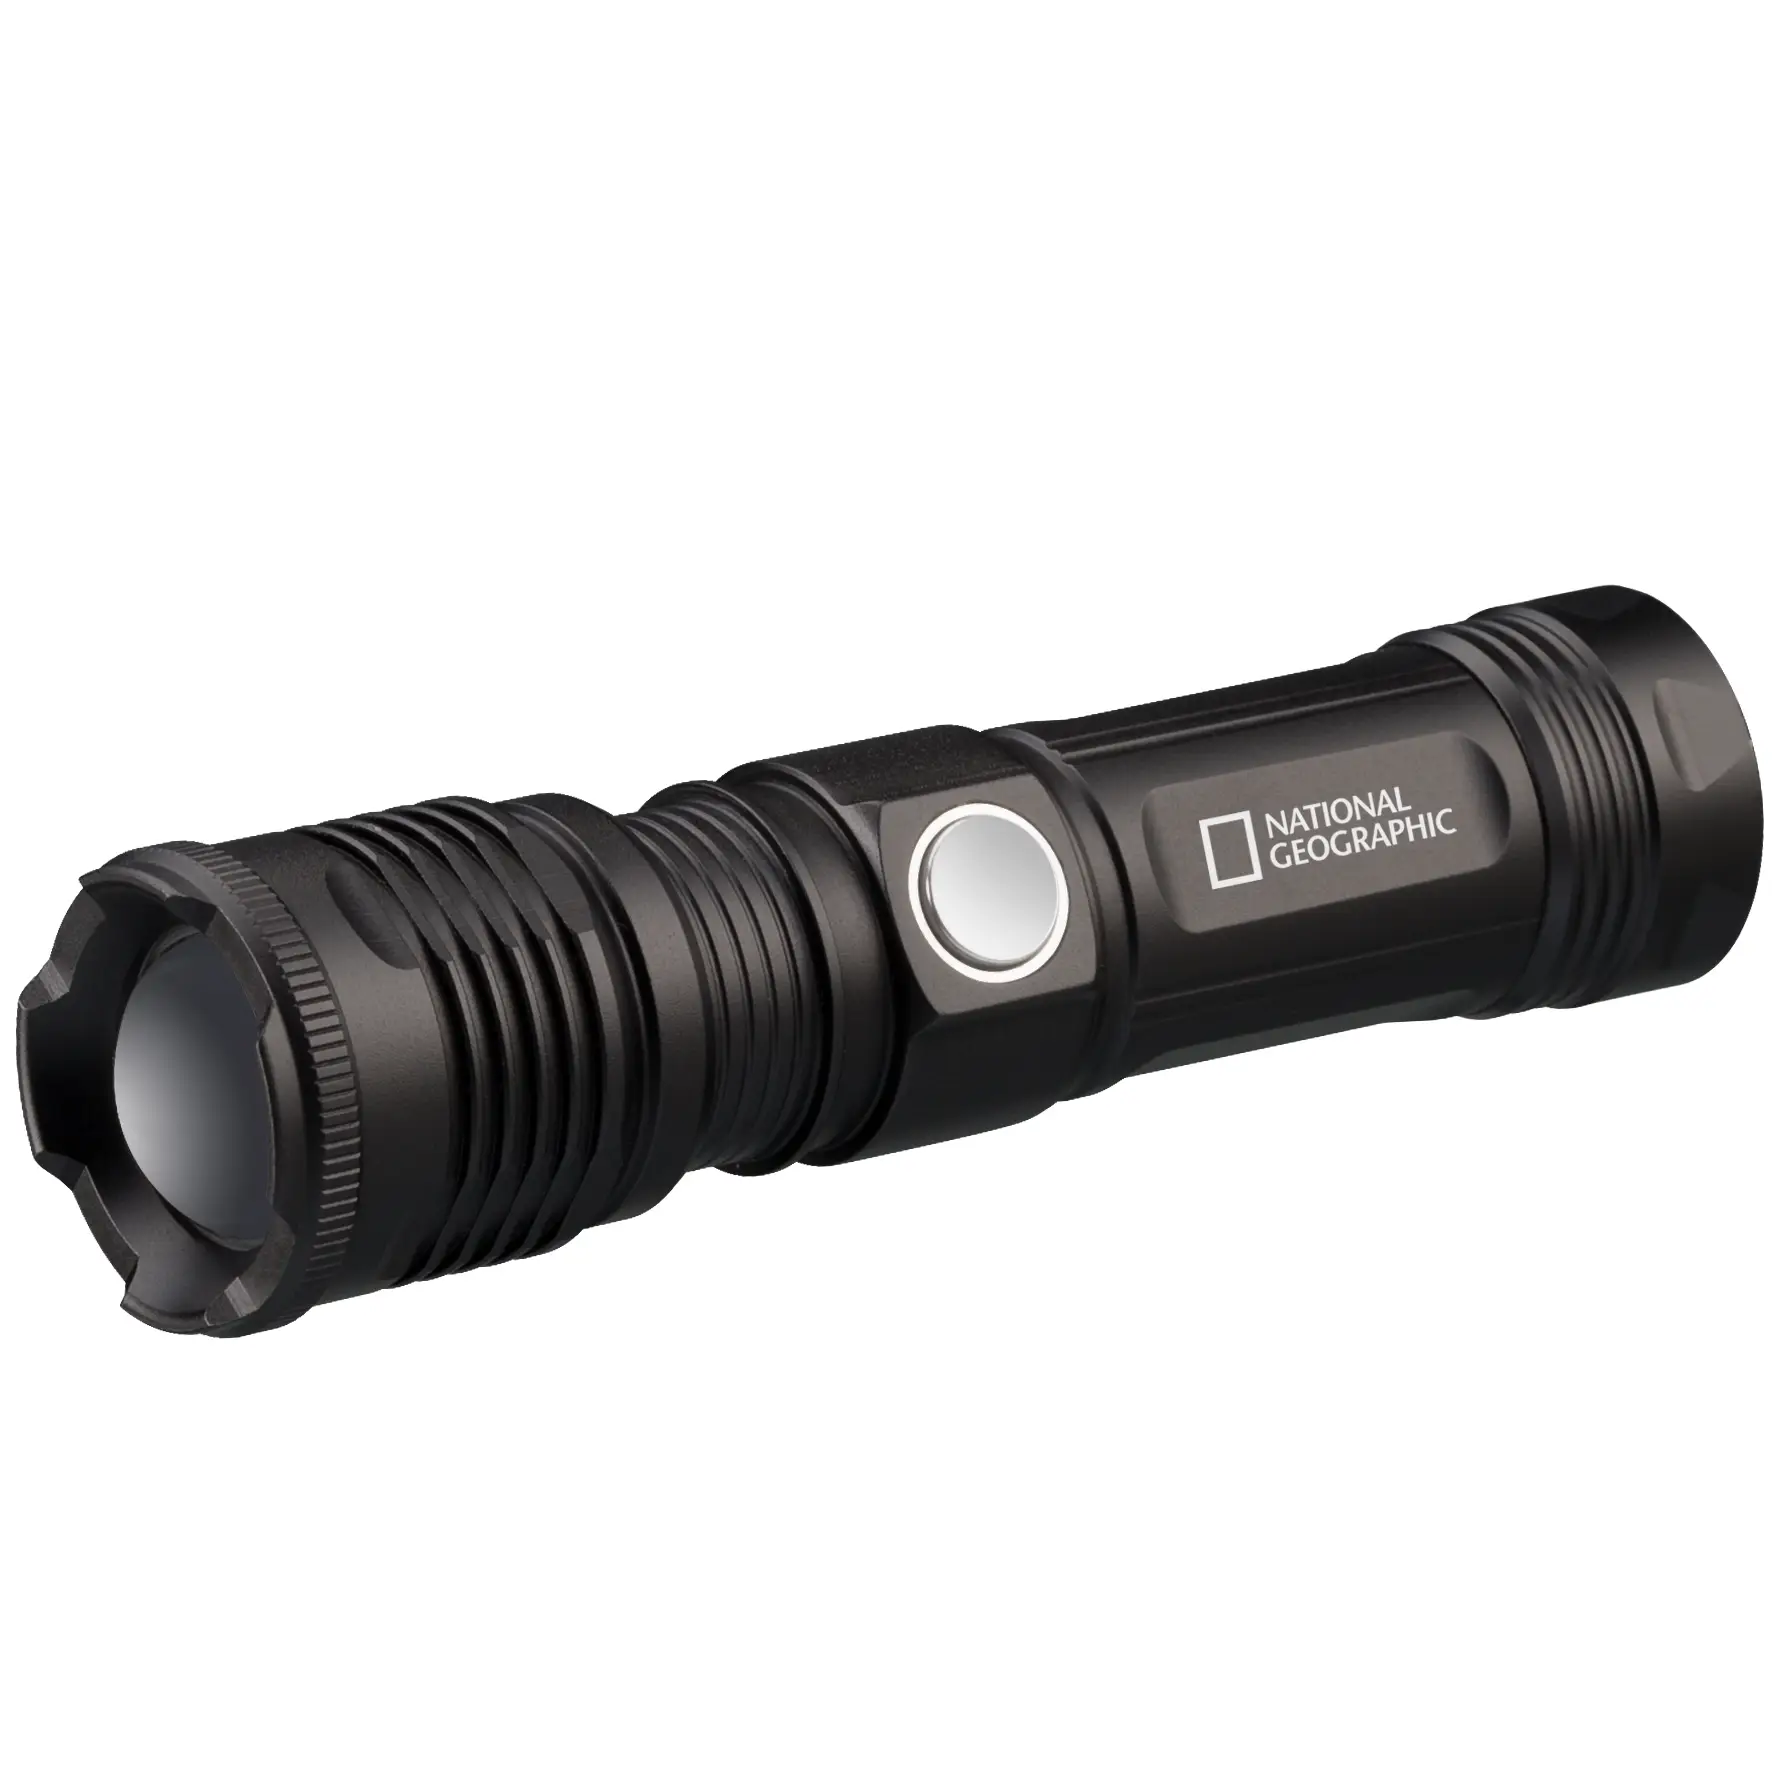 Характеристики фонарик National Geographic Iluminos Led Zoom Flashlight 1000 lm (9082400)